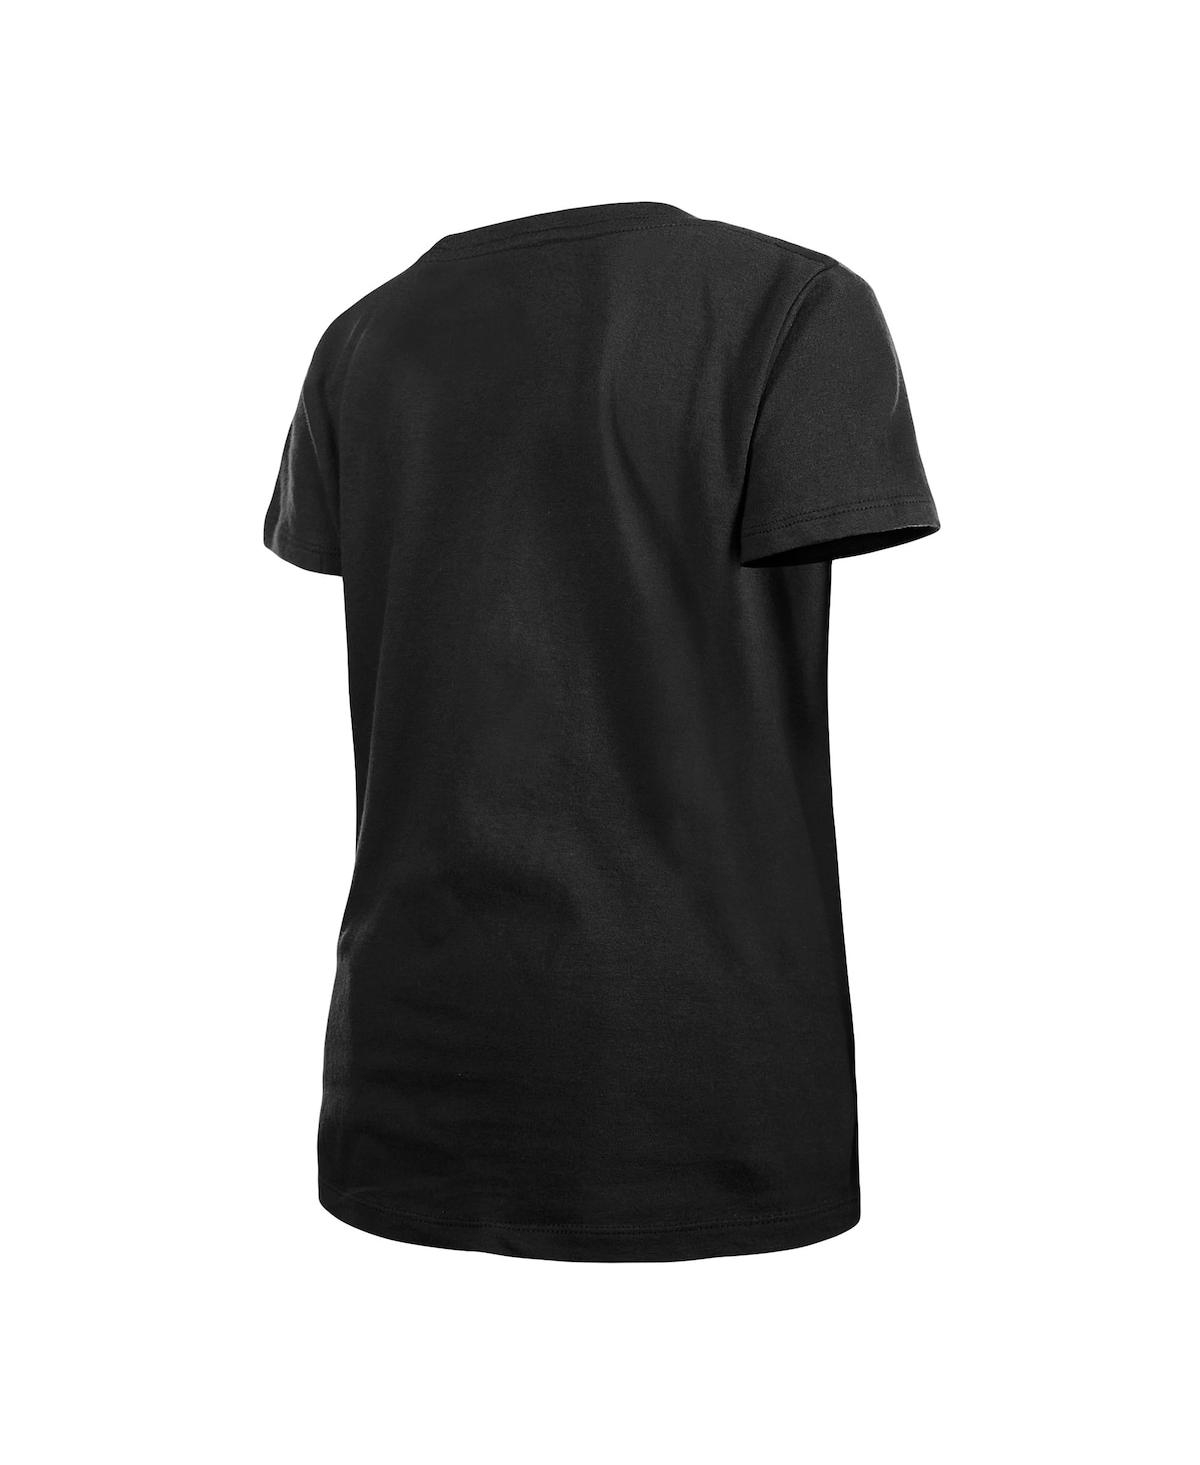 Shop New Era Big Girls  Black San Francisco Giants Flip Sequin Team V-neck T-shirt